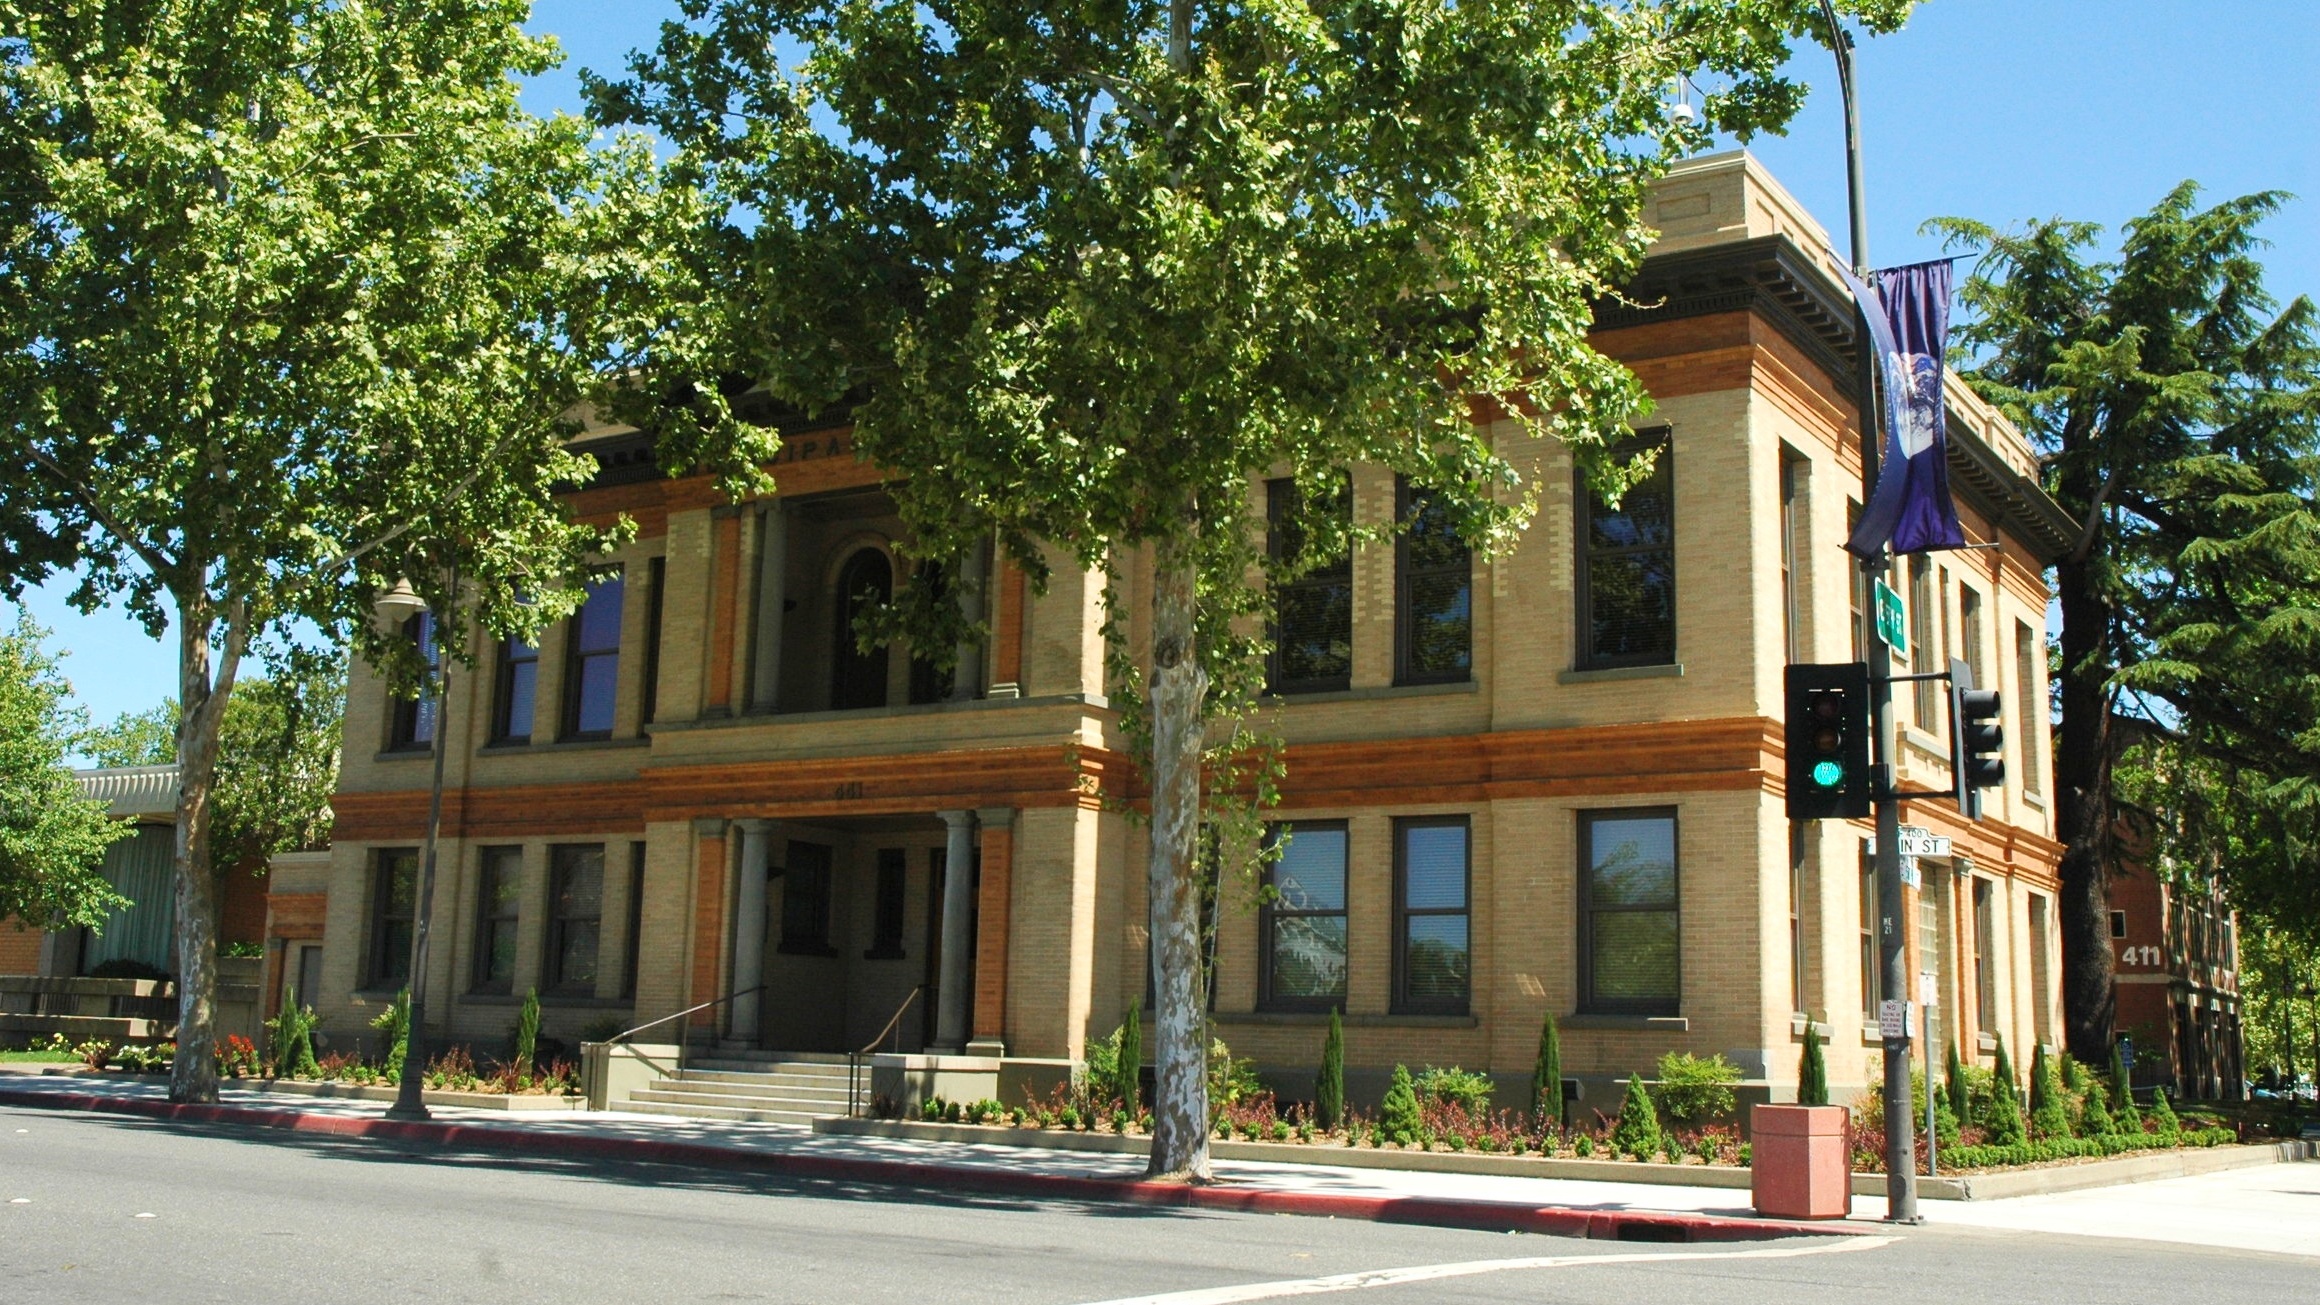   Old Municipal Building   Historical Rehabilitation,   Chico 